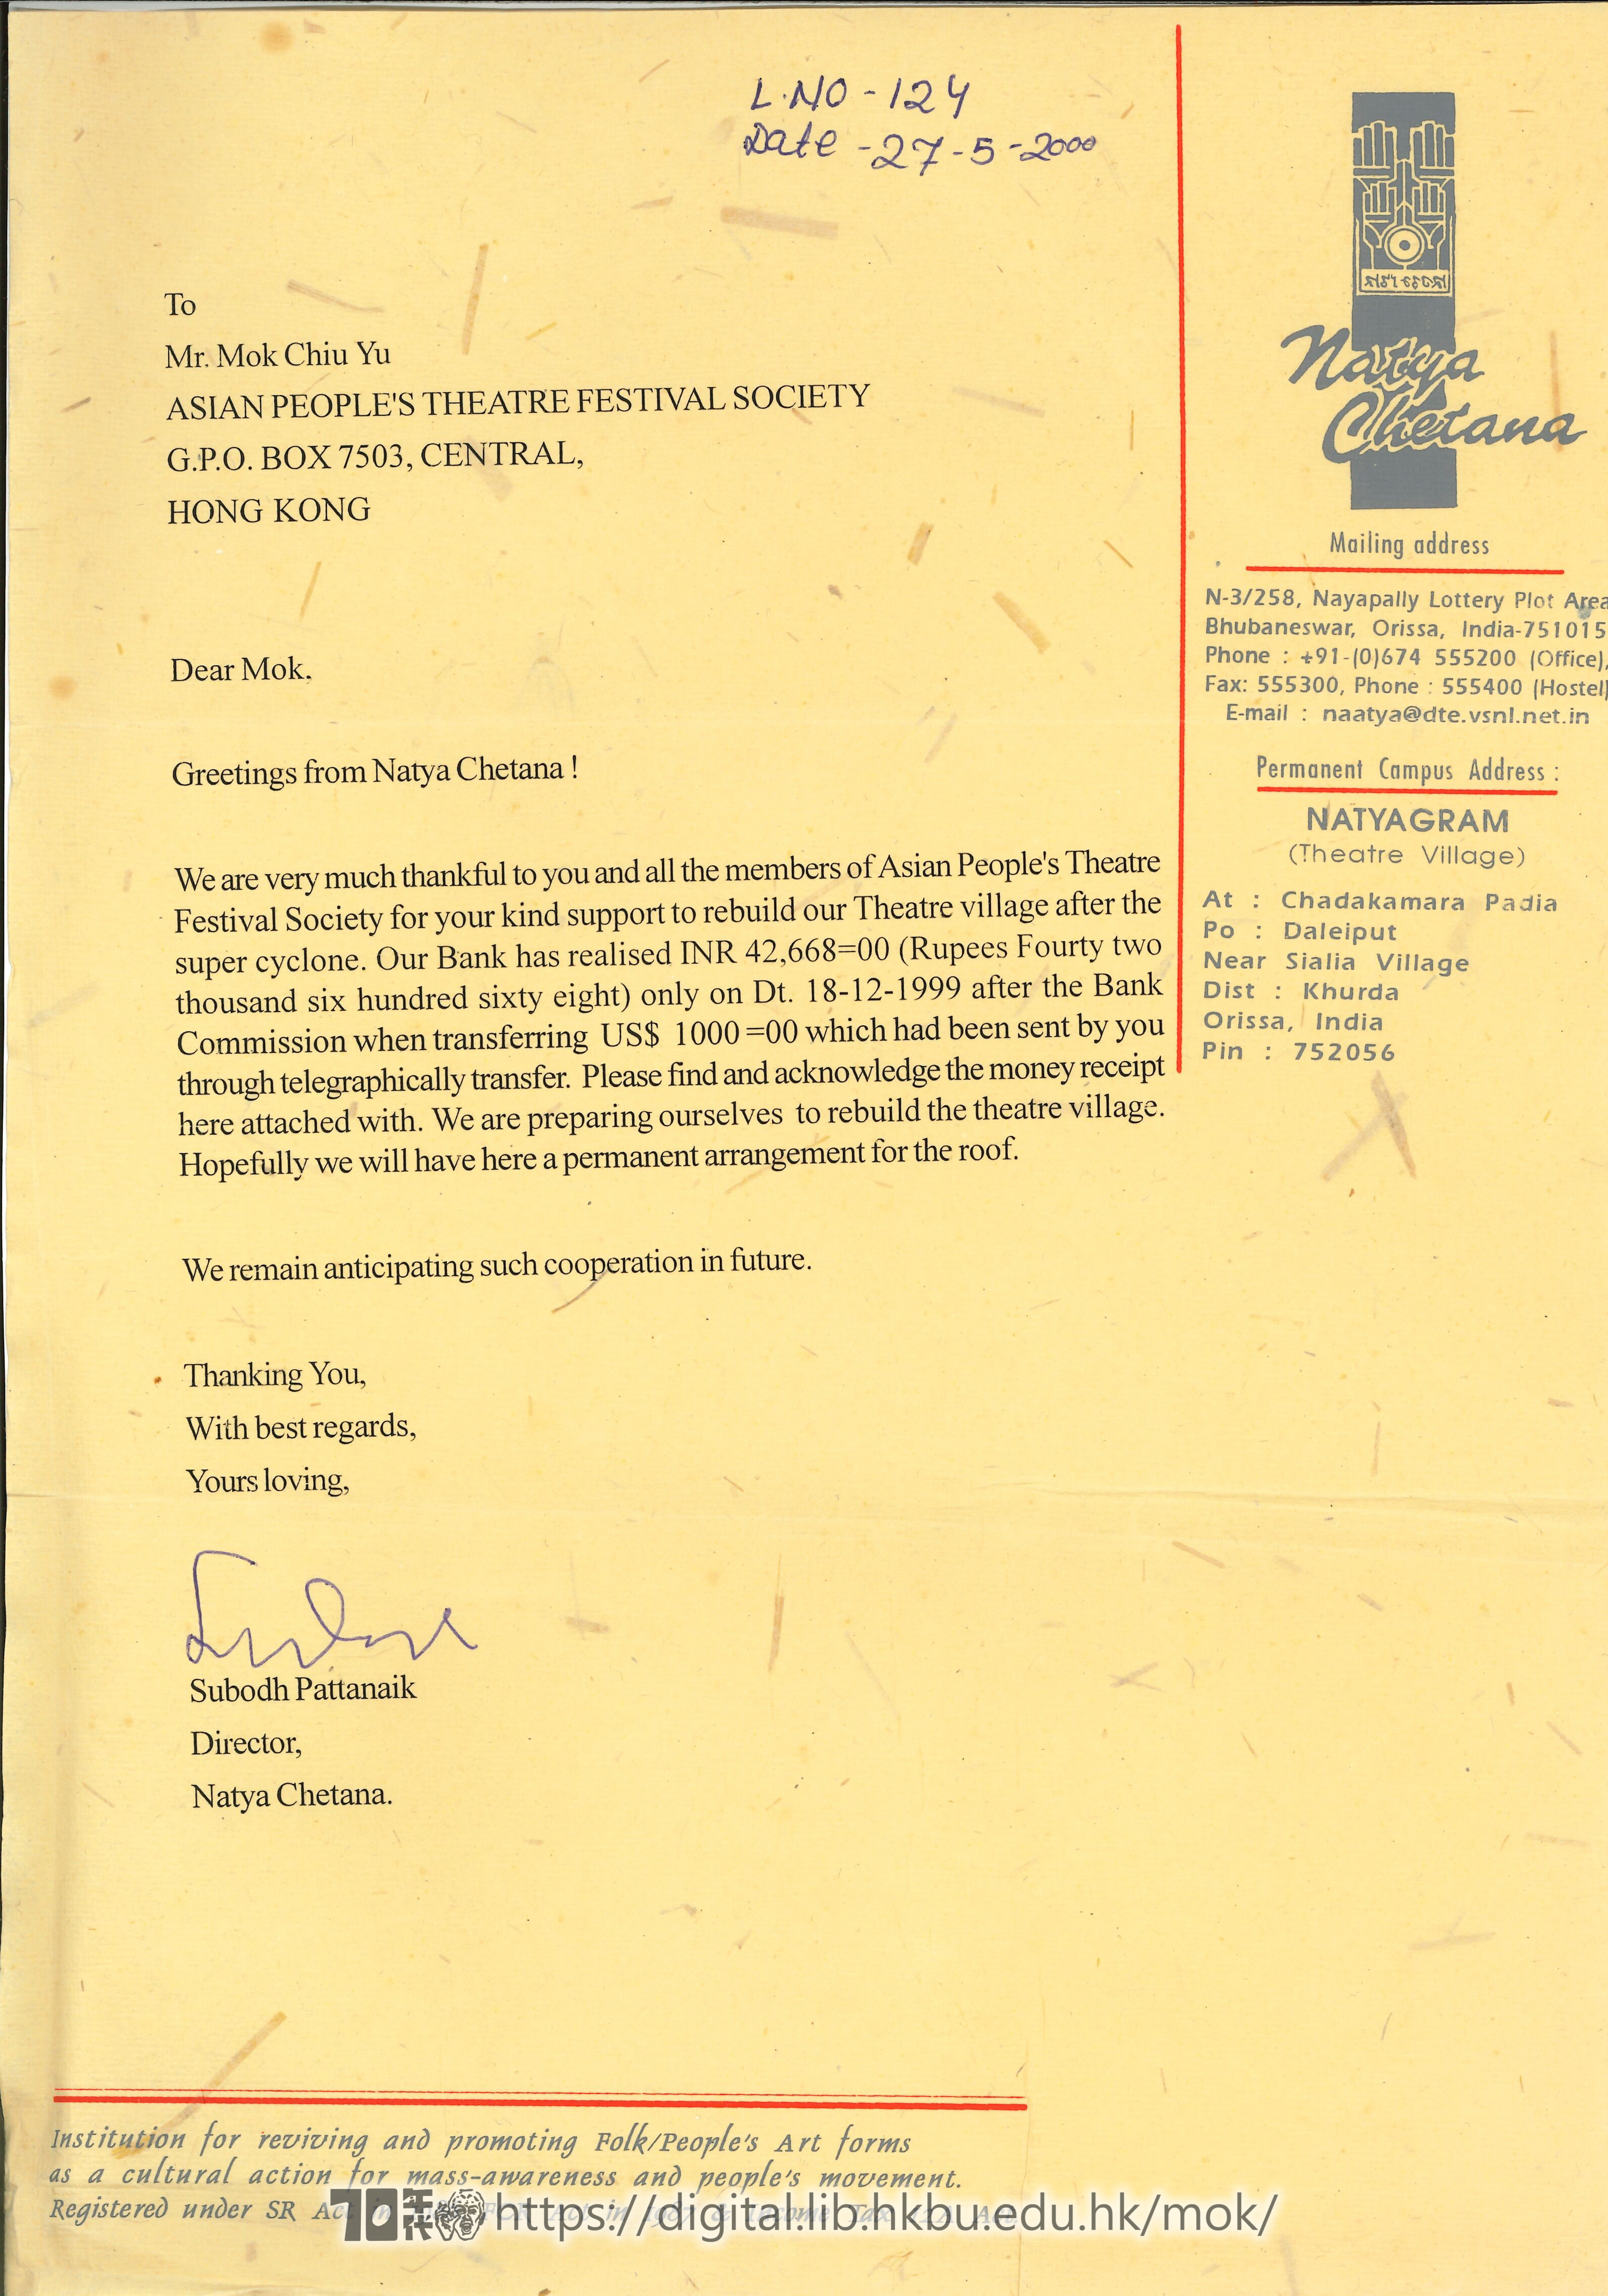   Letter and receipt from Subodh Pattanaik (director of Natya Chetana, India)  